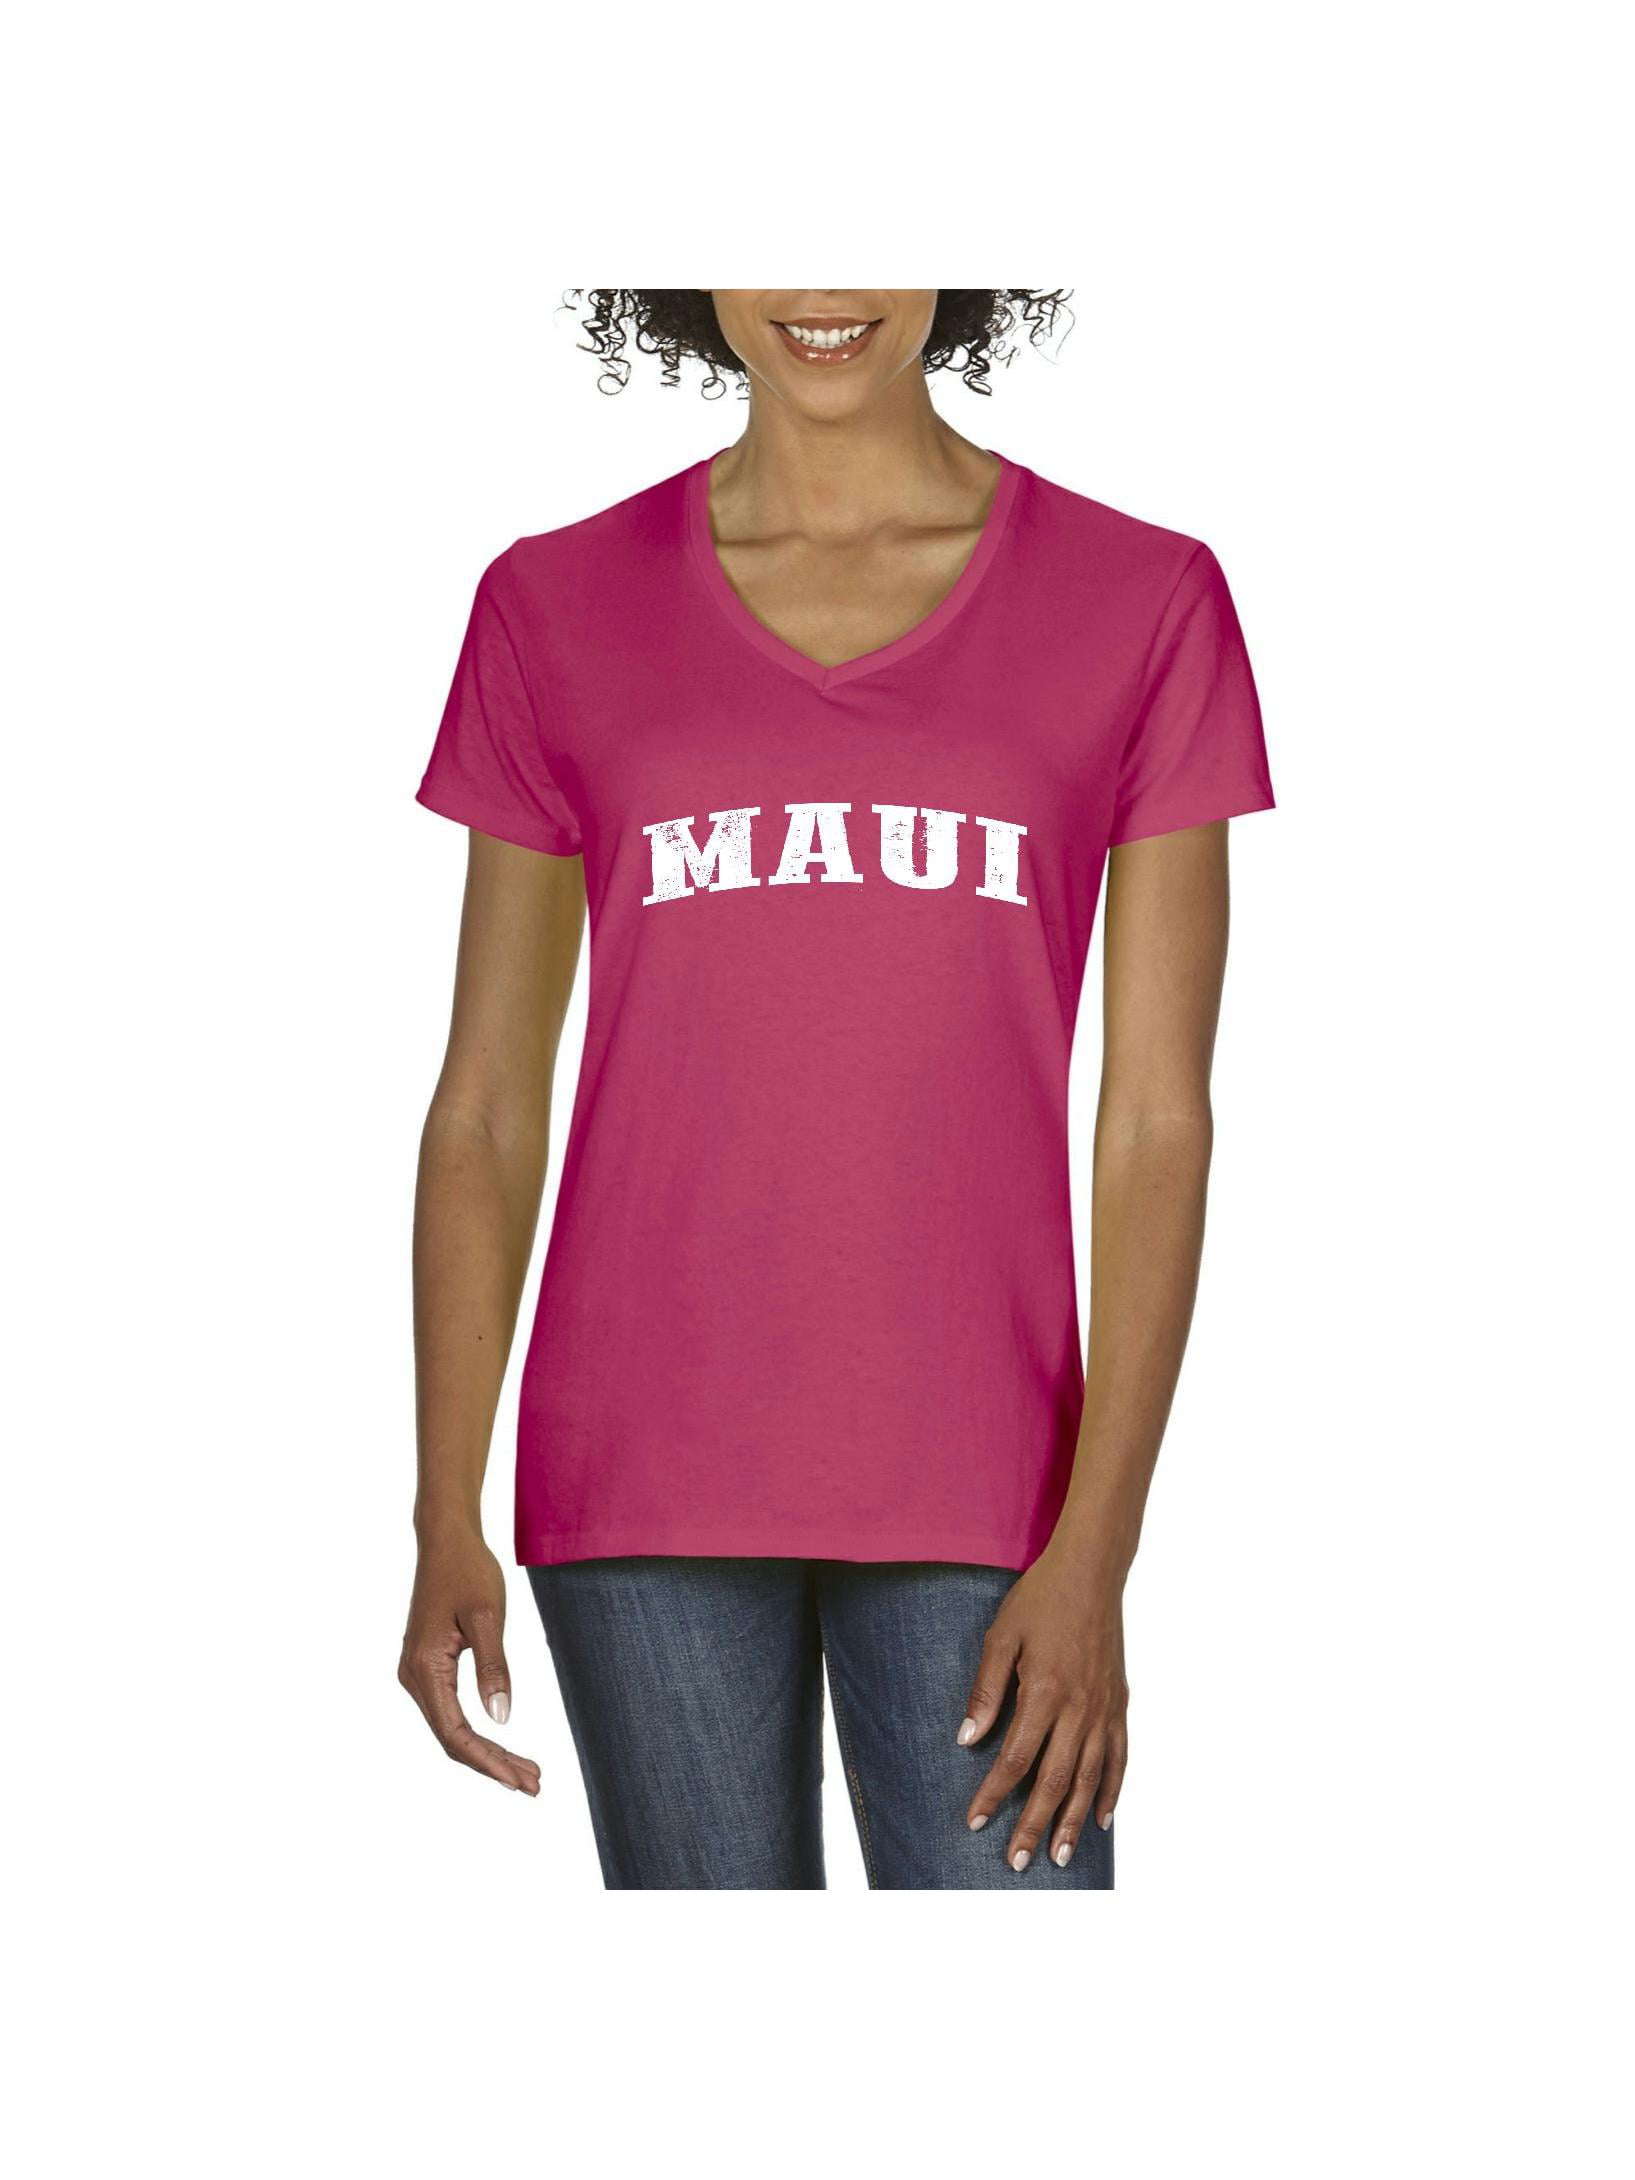 Tee Shirt In Prink Maui Hawaii Shirt Clothing 